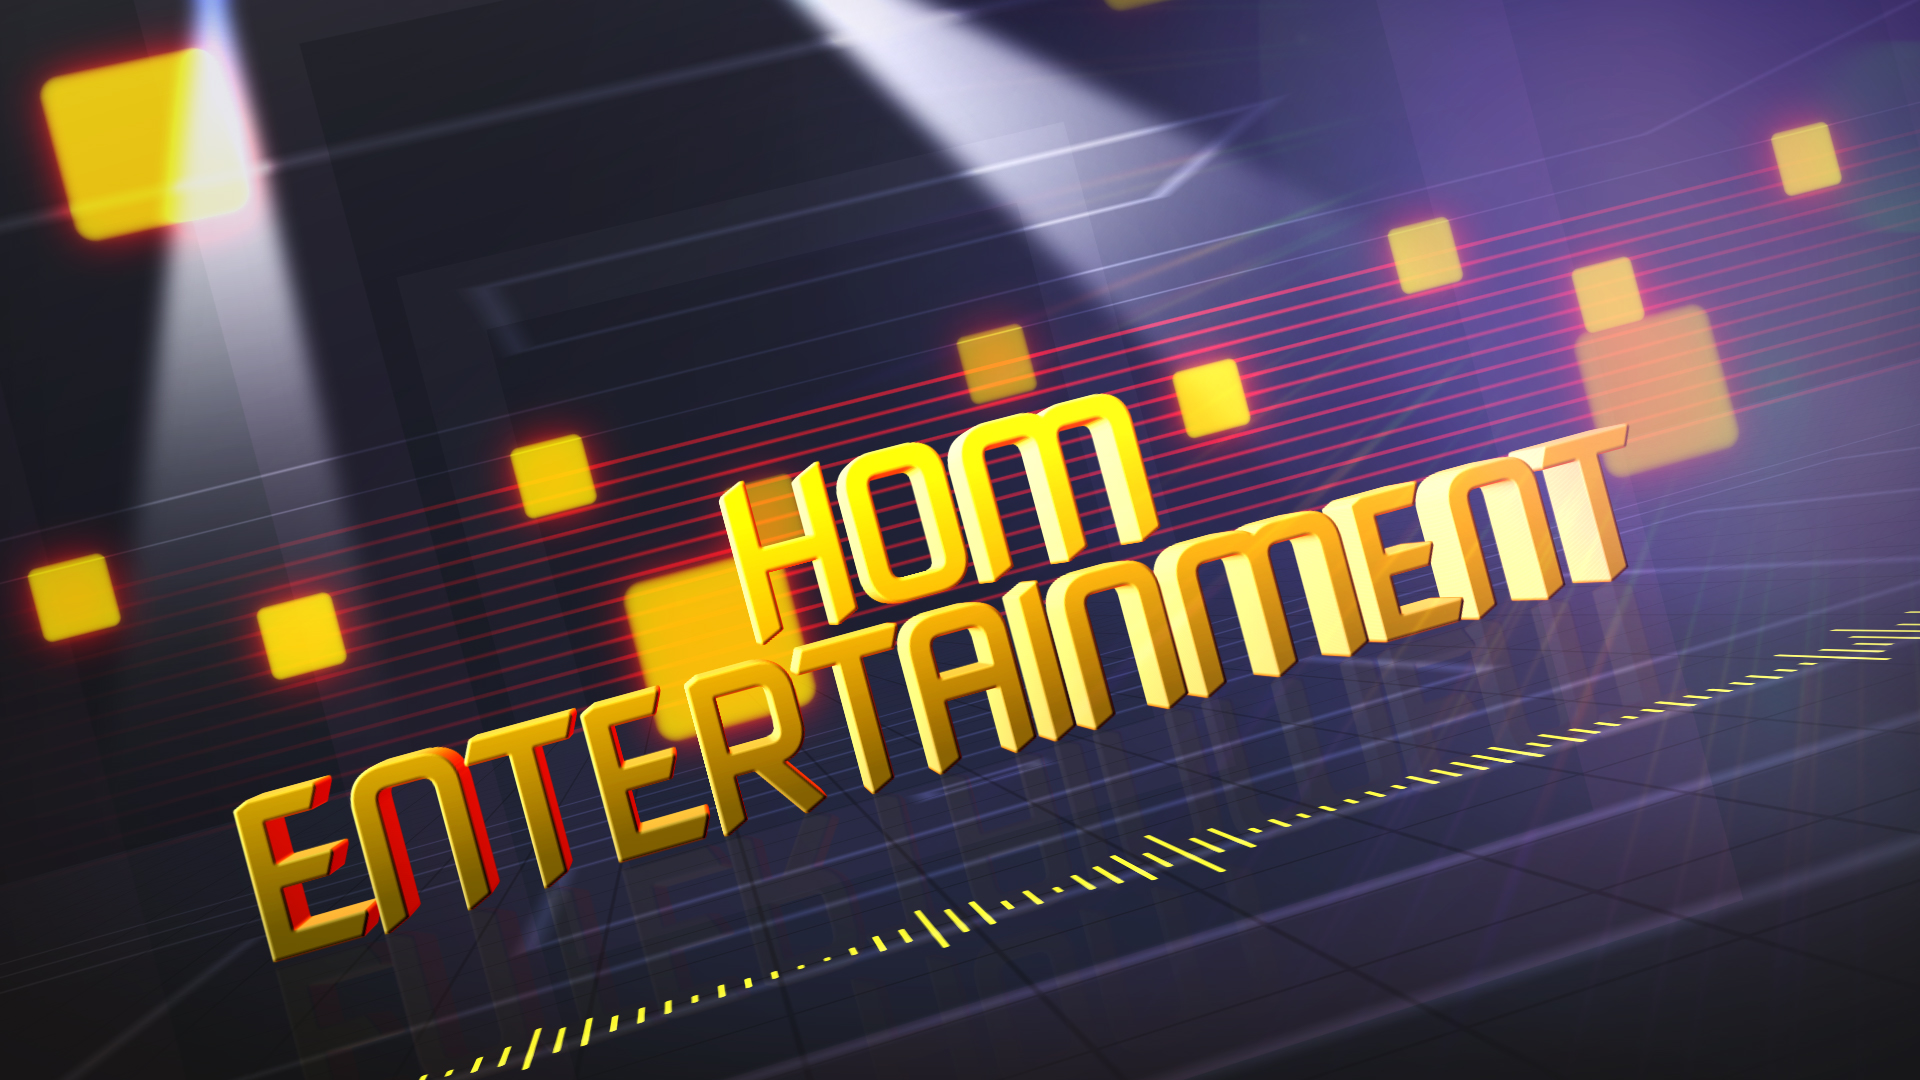 HOM Entertainment